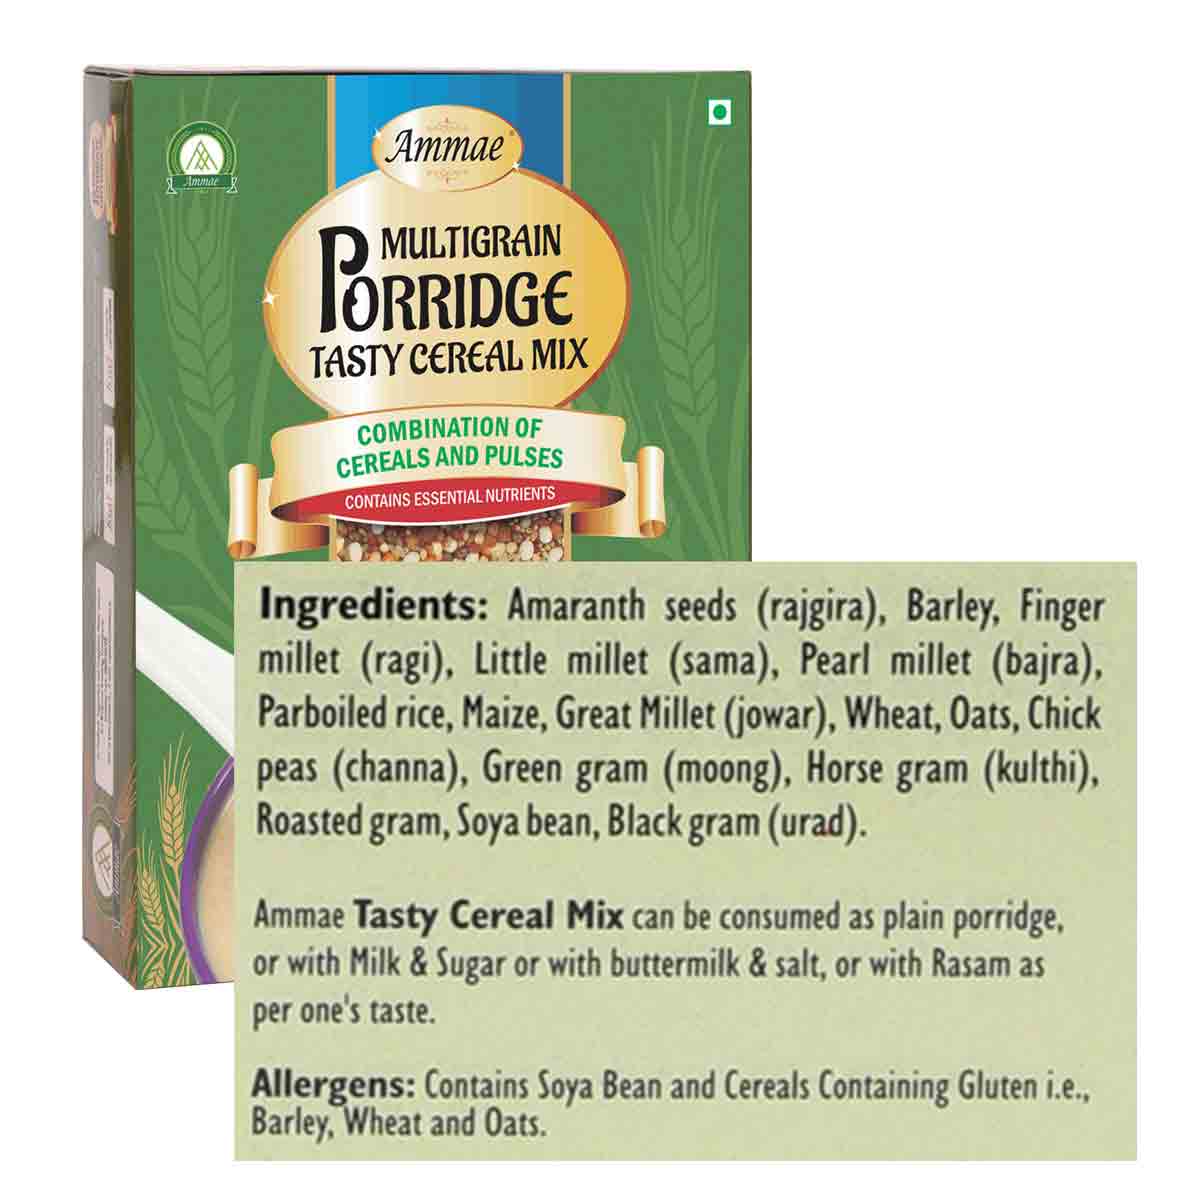 Ammae Multigrain Porridge Mix | Tasty Cereal Mix for adults - Ammae Foods India